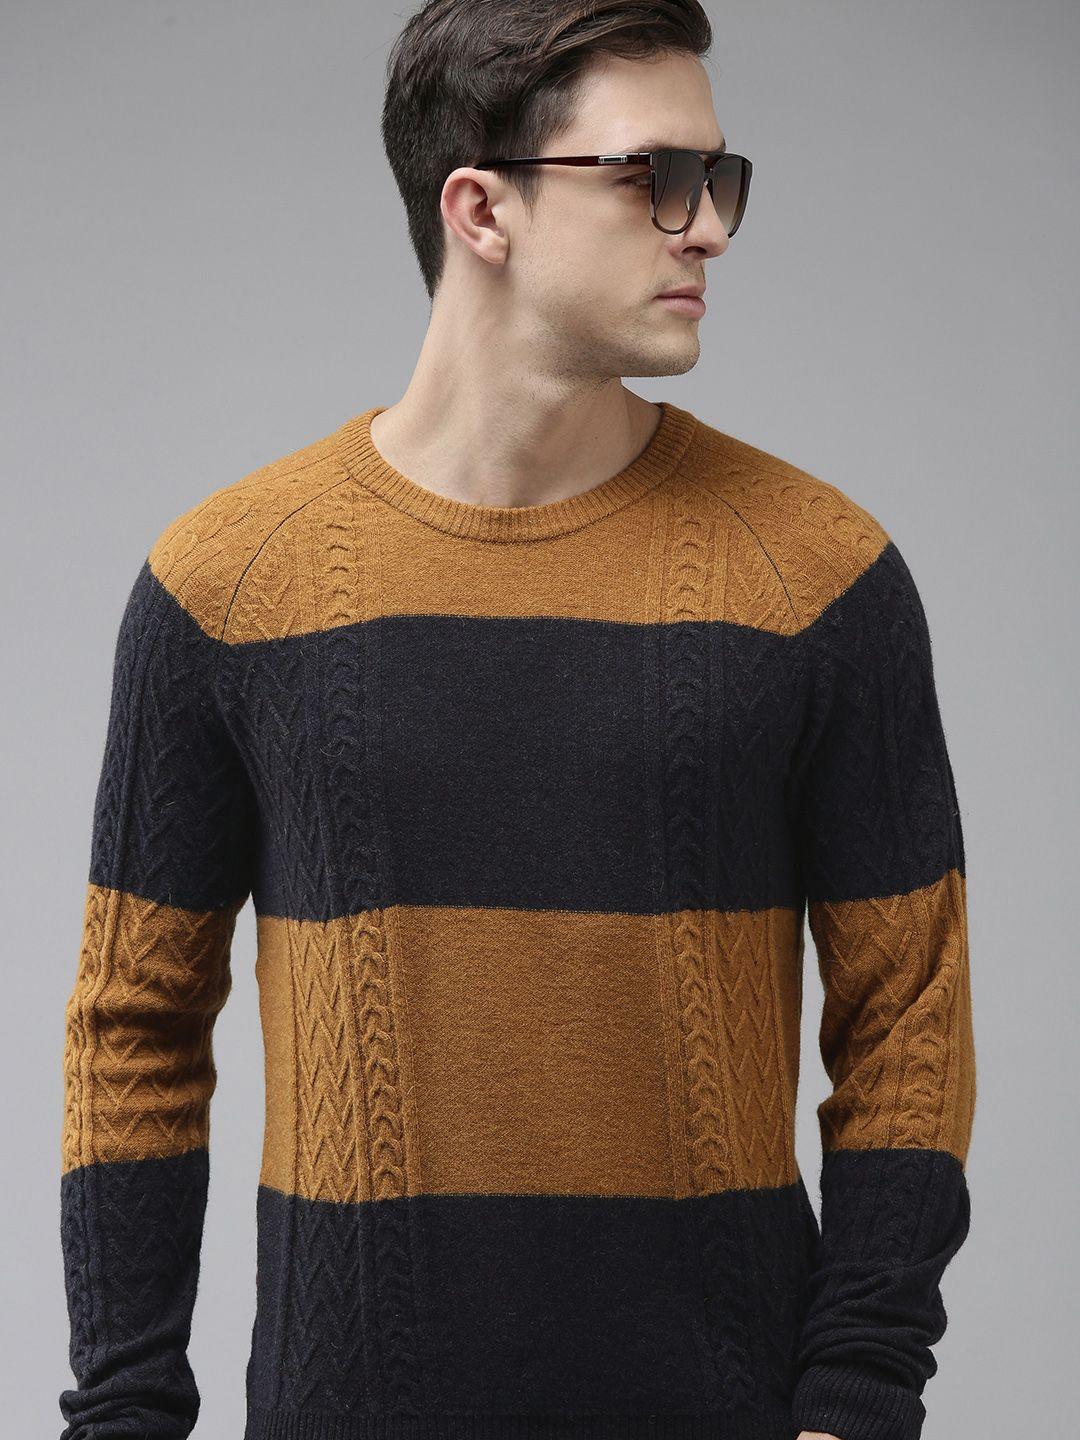 u-s-polo-assn-men-mustard-yellow-&-navy-blue-colourblocked-pullover-sweater